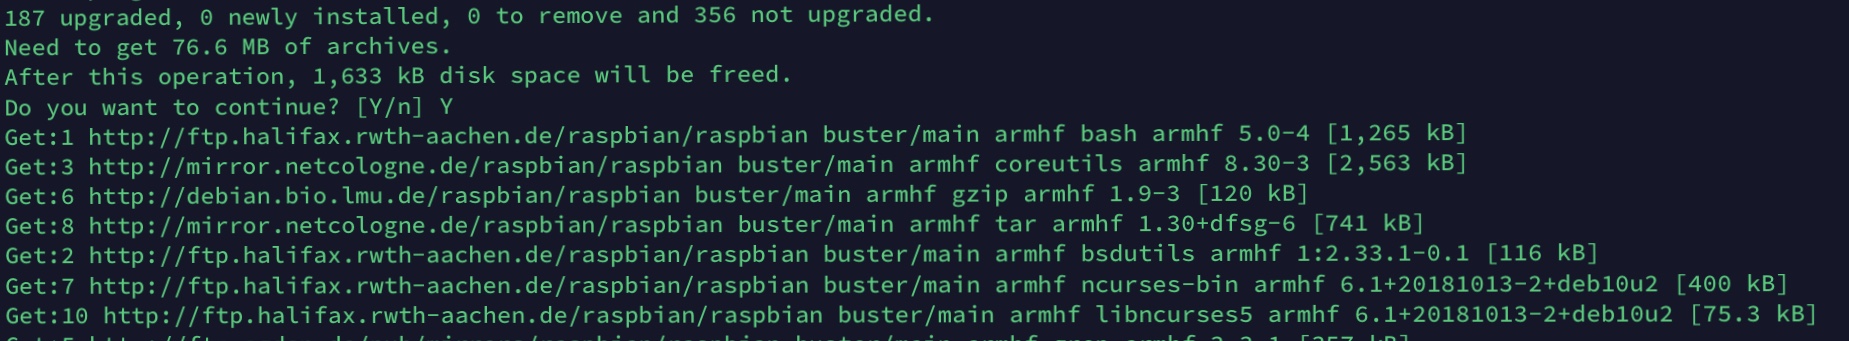 apt-get upgrade Linux Befehl